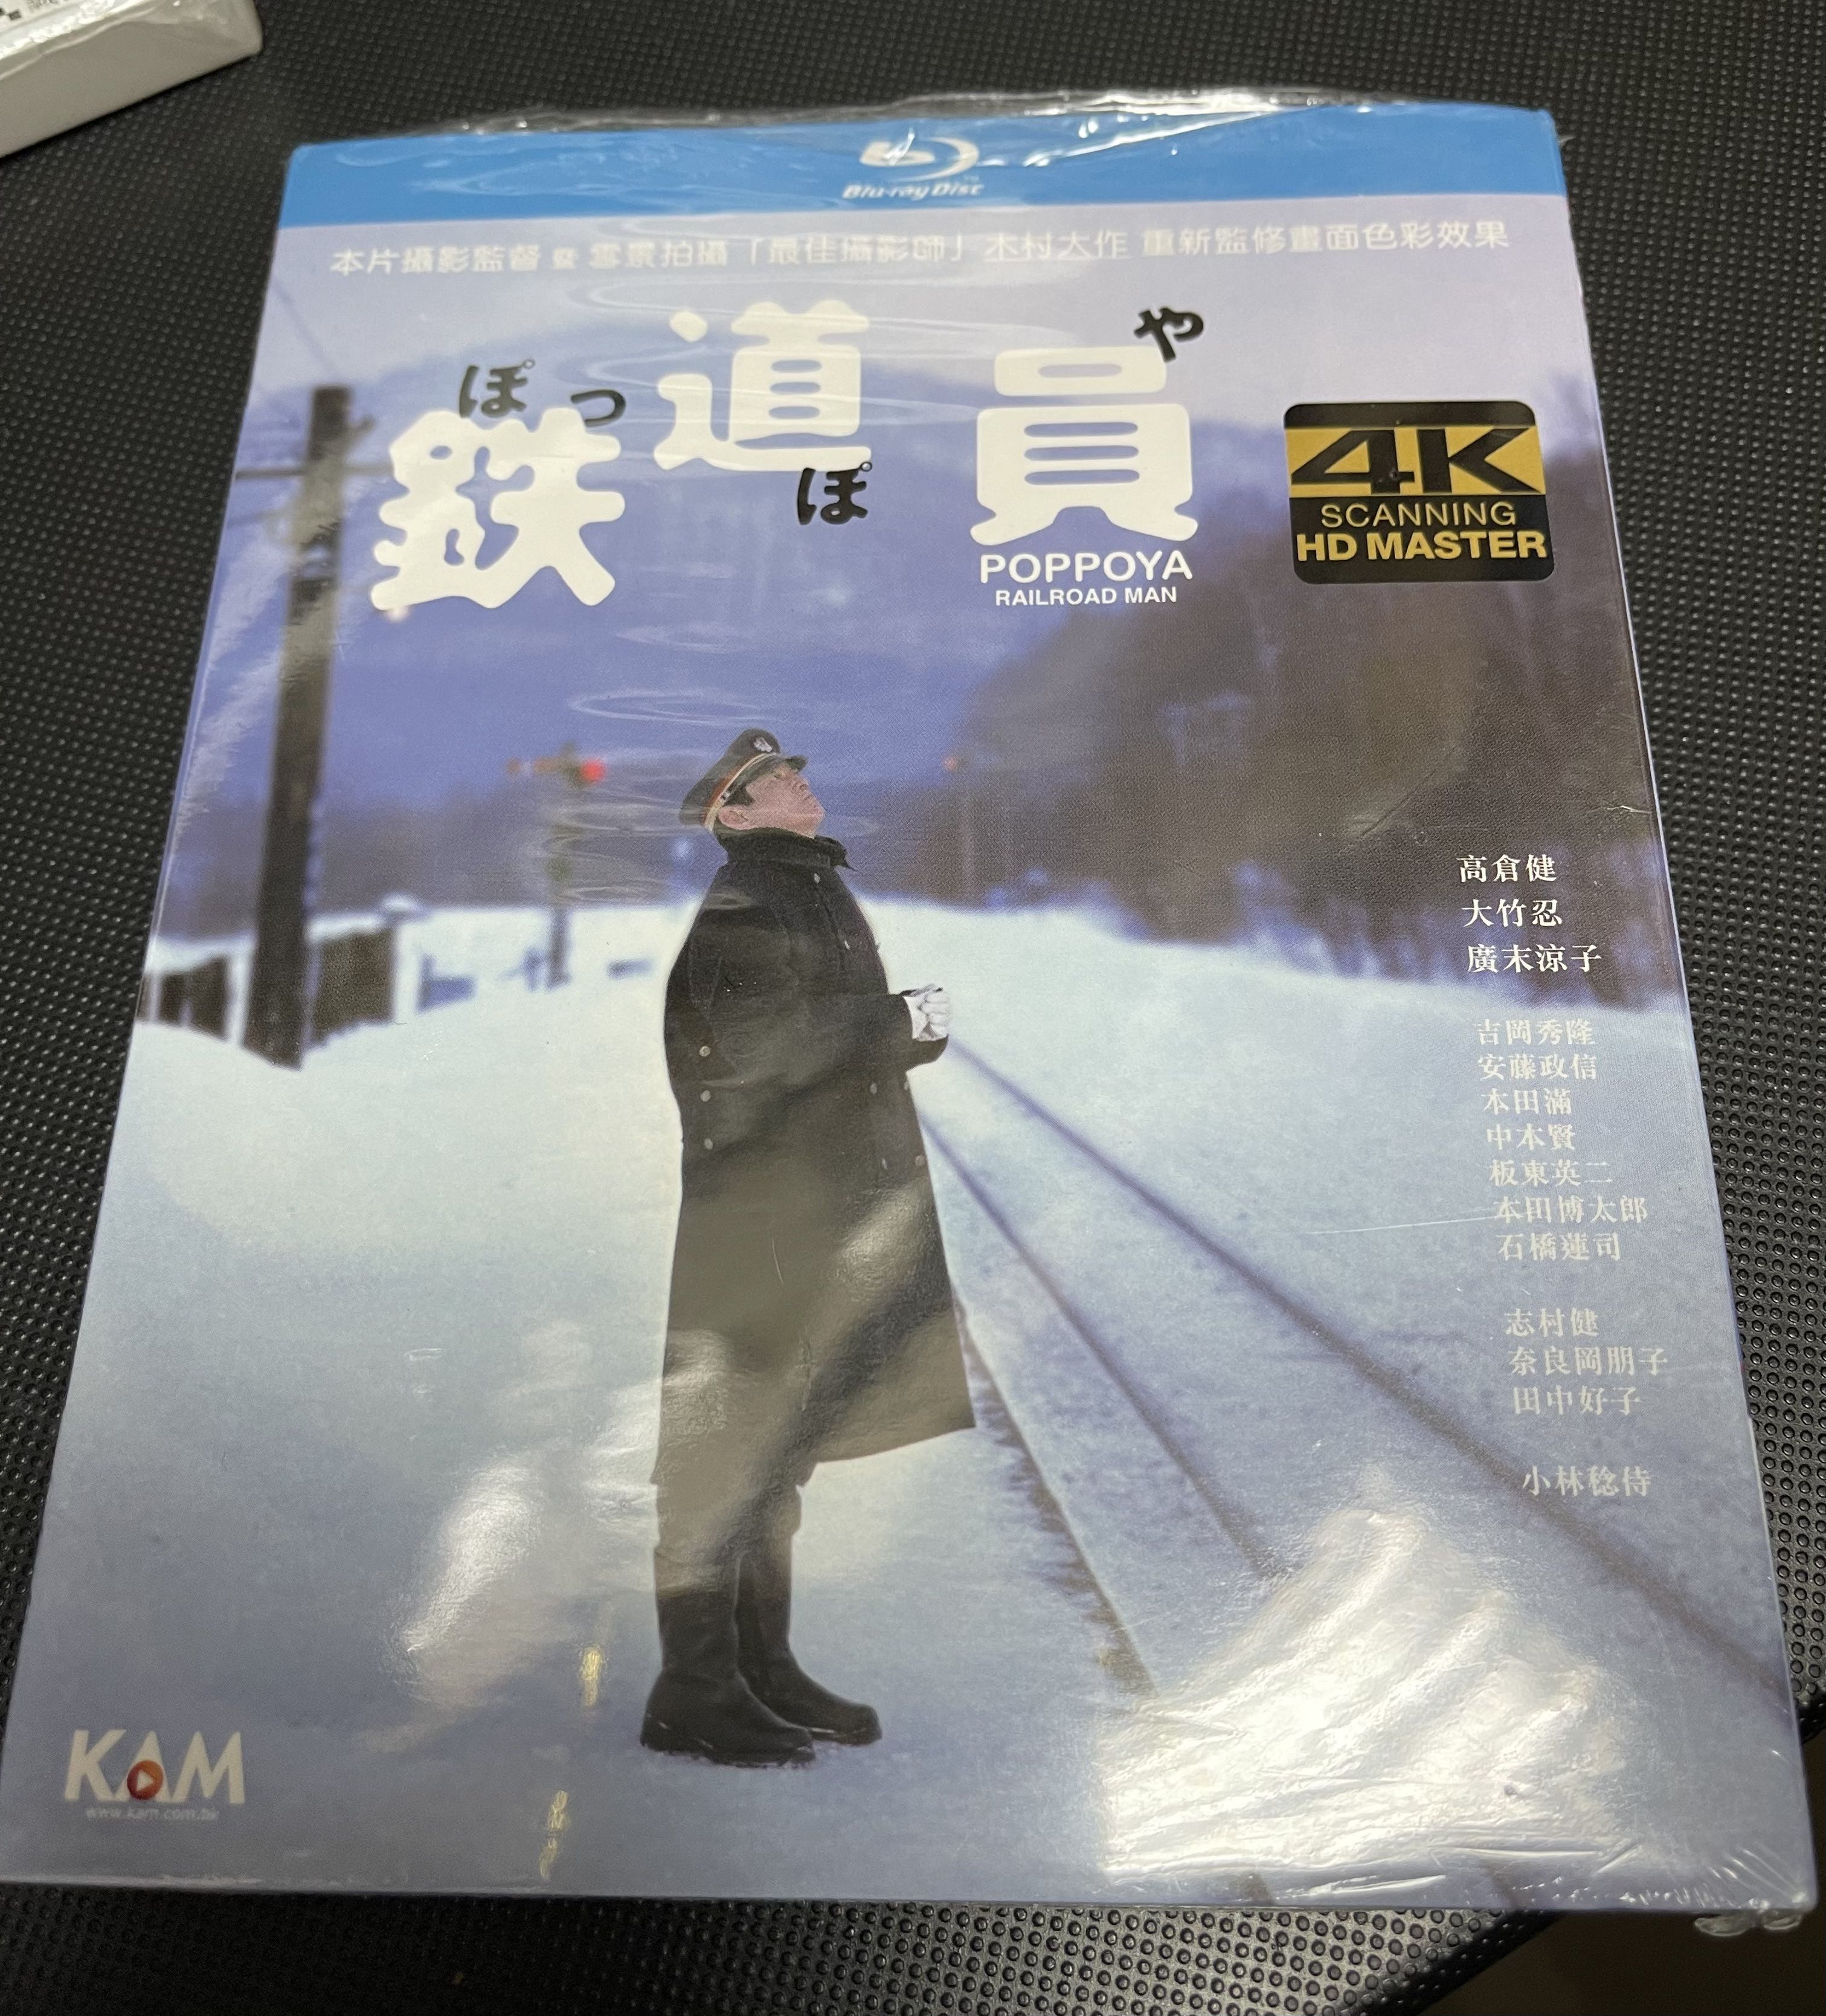 Poppoya - Railroad Man 鐵道員blu ray (1999) 4K Scanning HD 